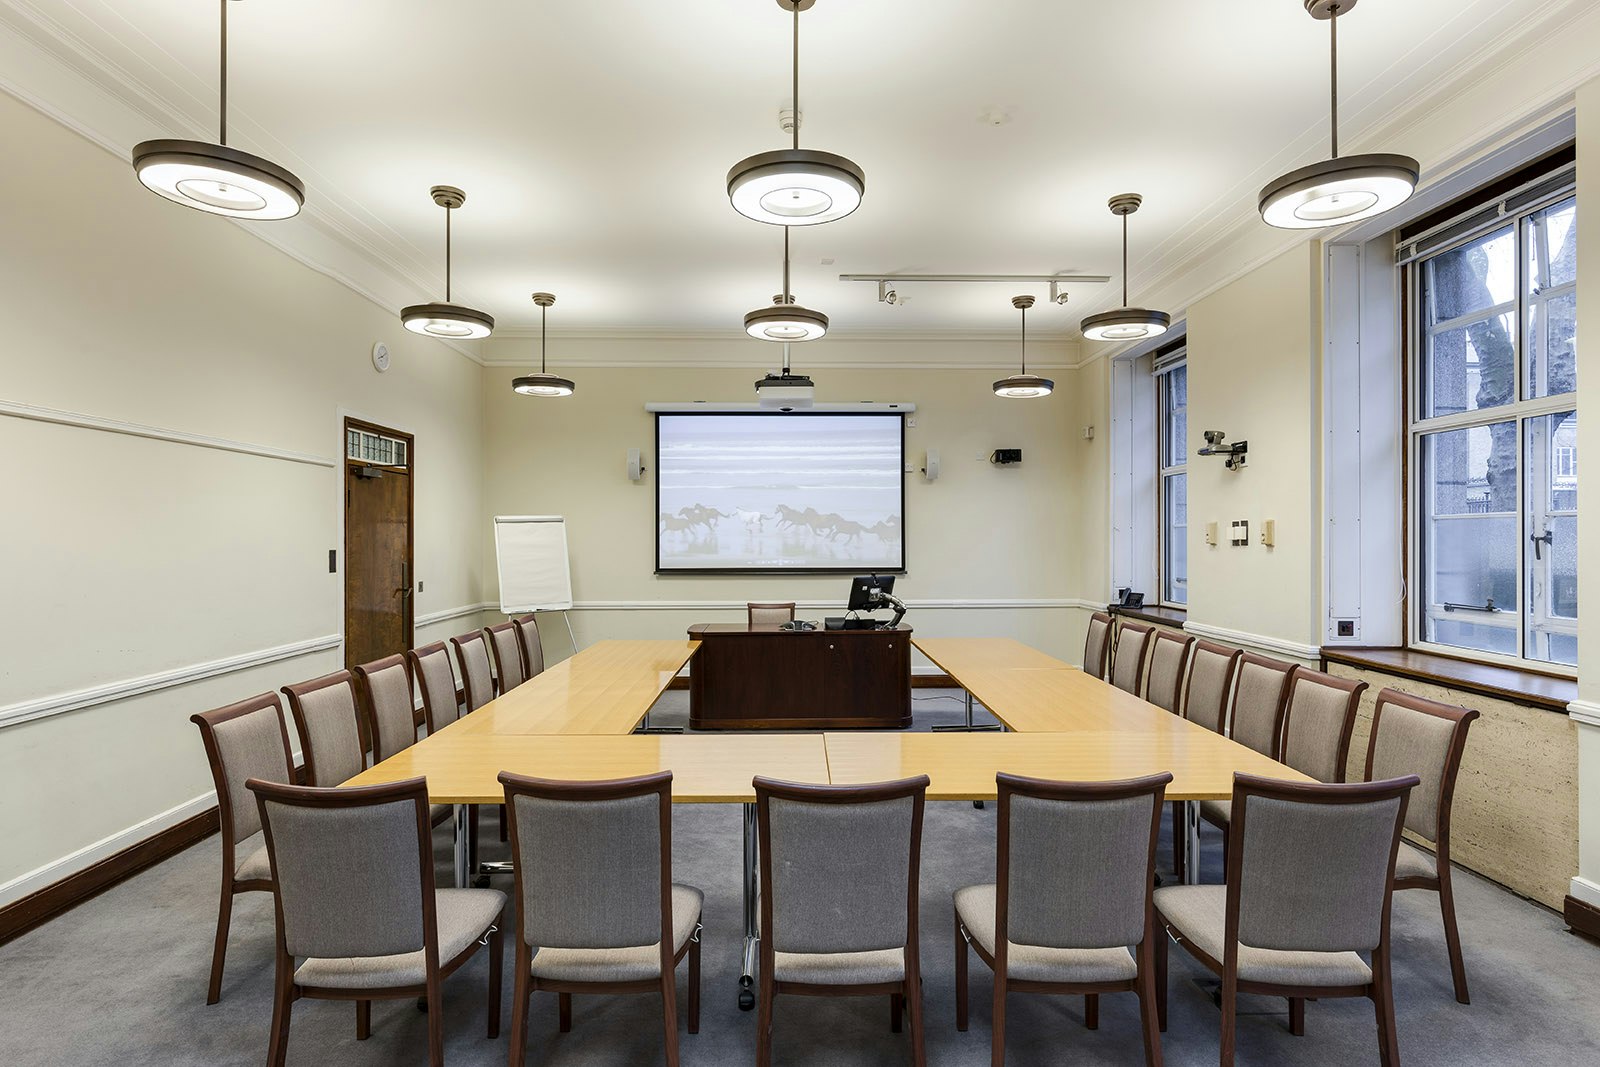 University of London Venues - Meeting Rooms - Senate House image 1